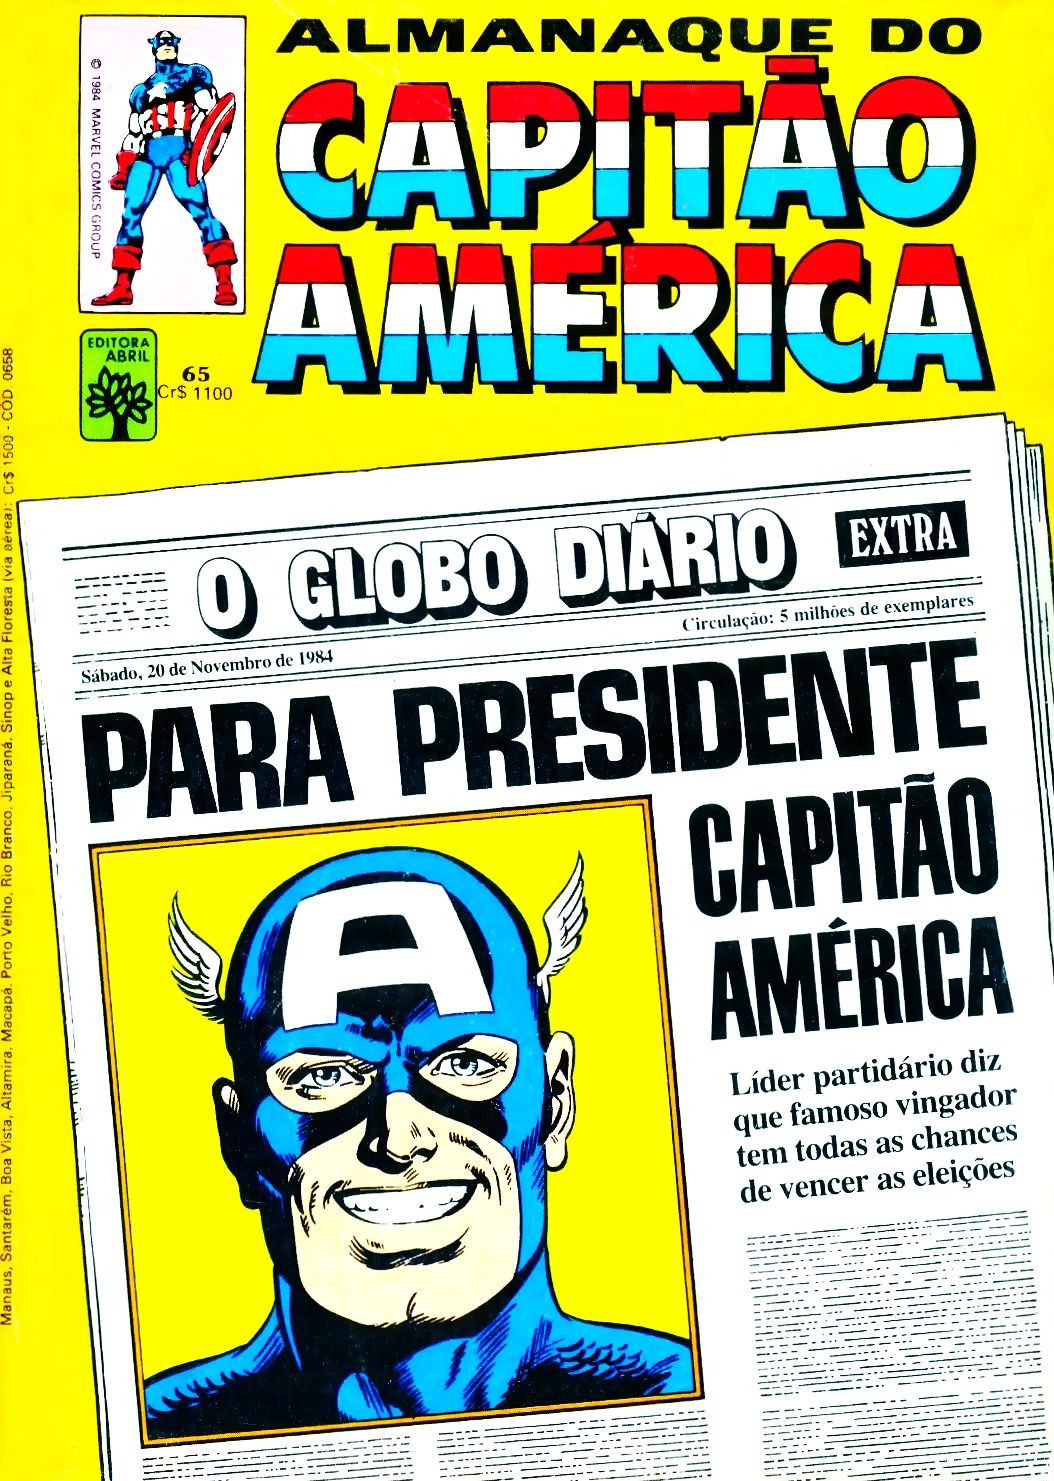 Capitao America II [1979 TV Movie]